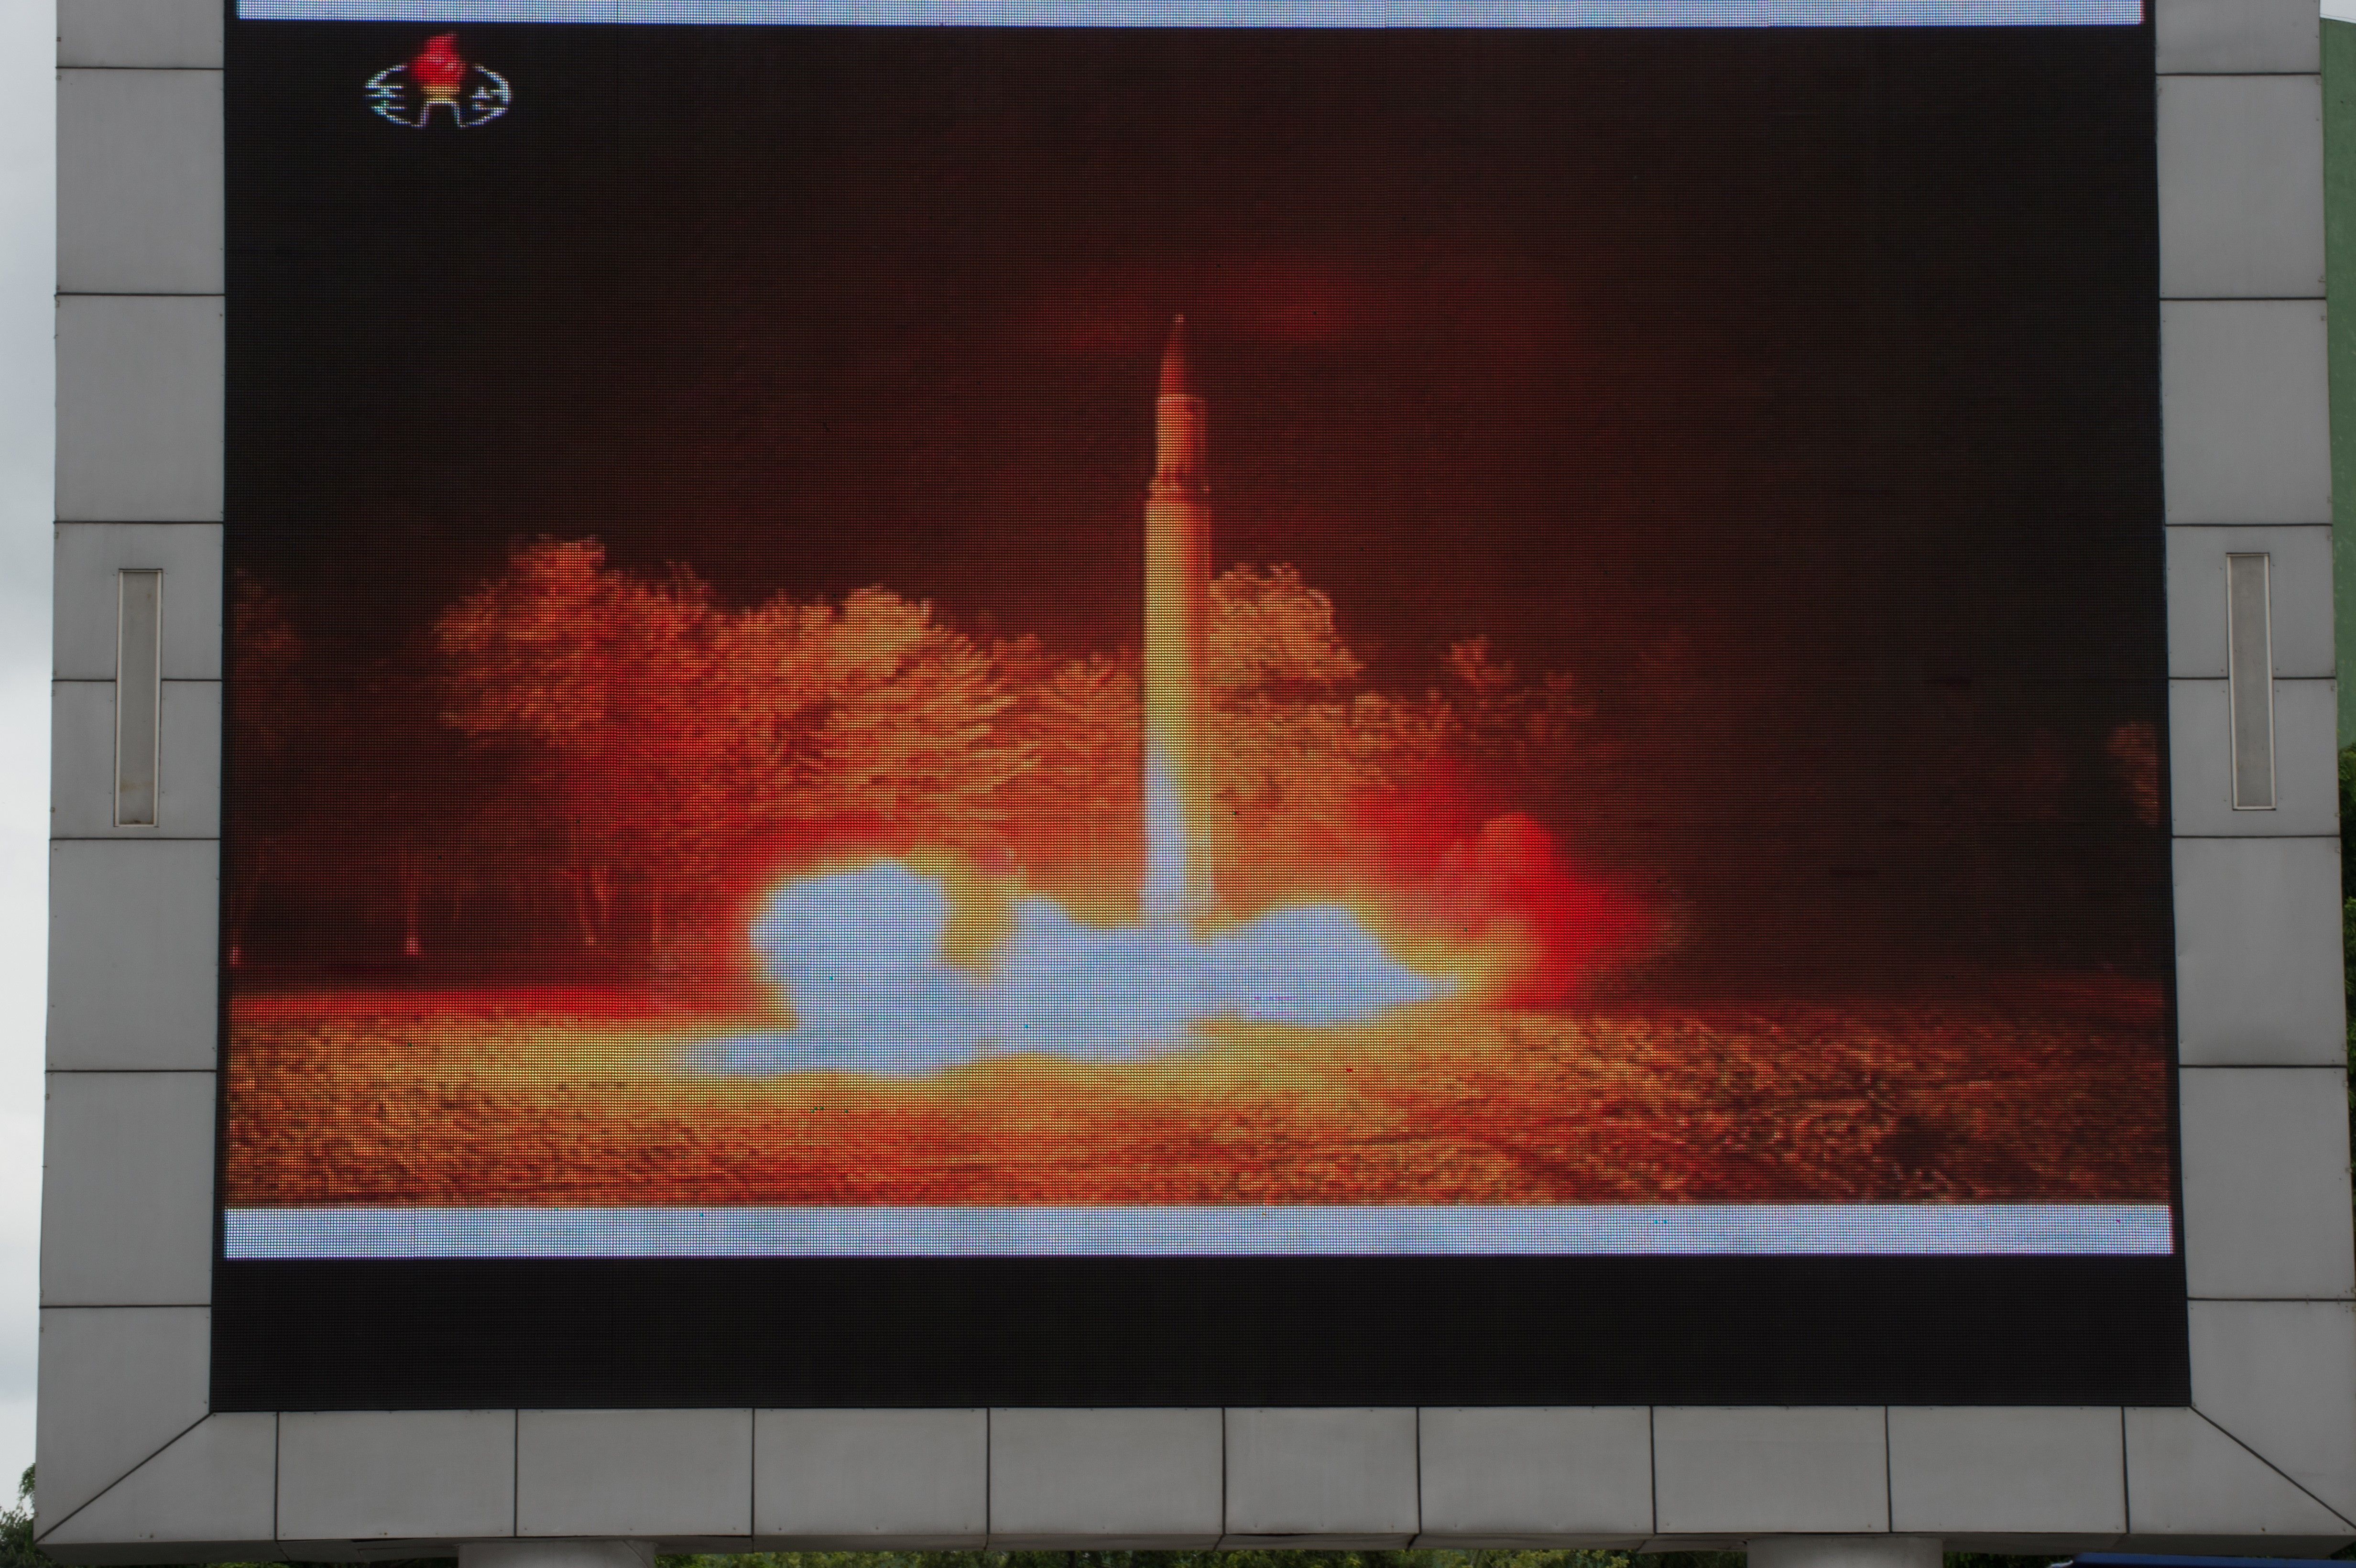 An ICBM test on public display in North Korea